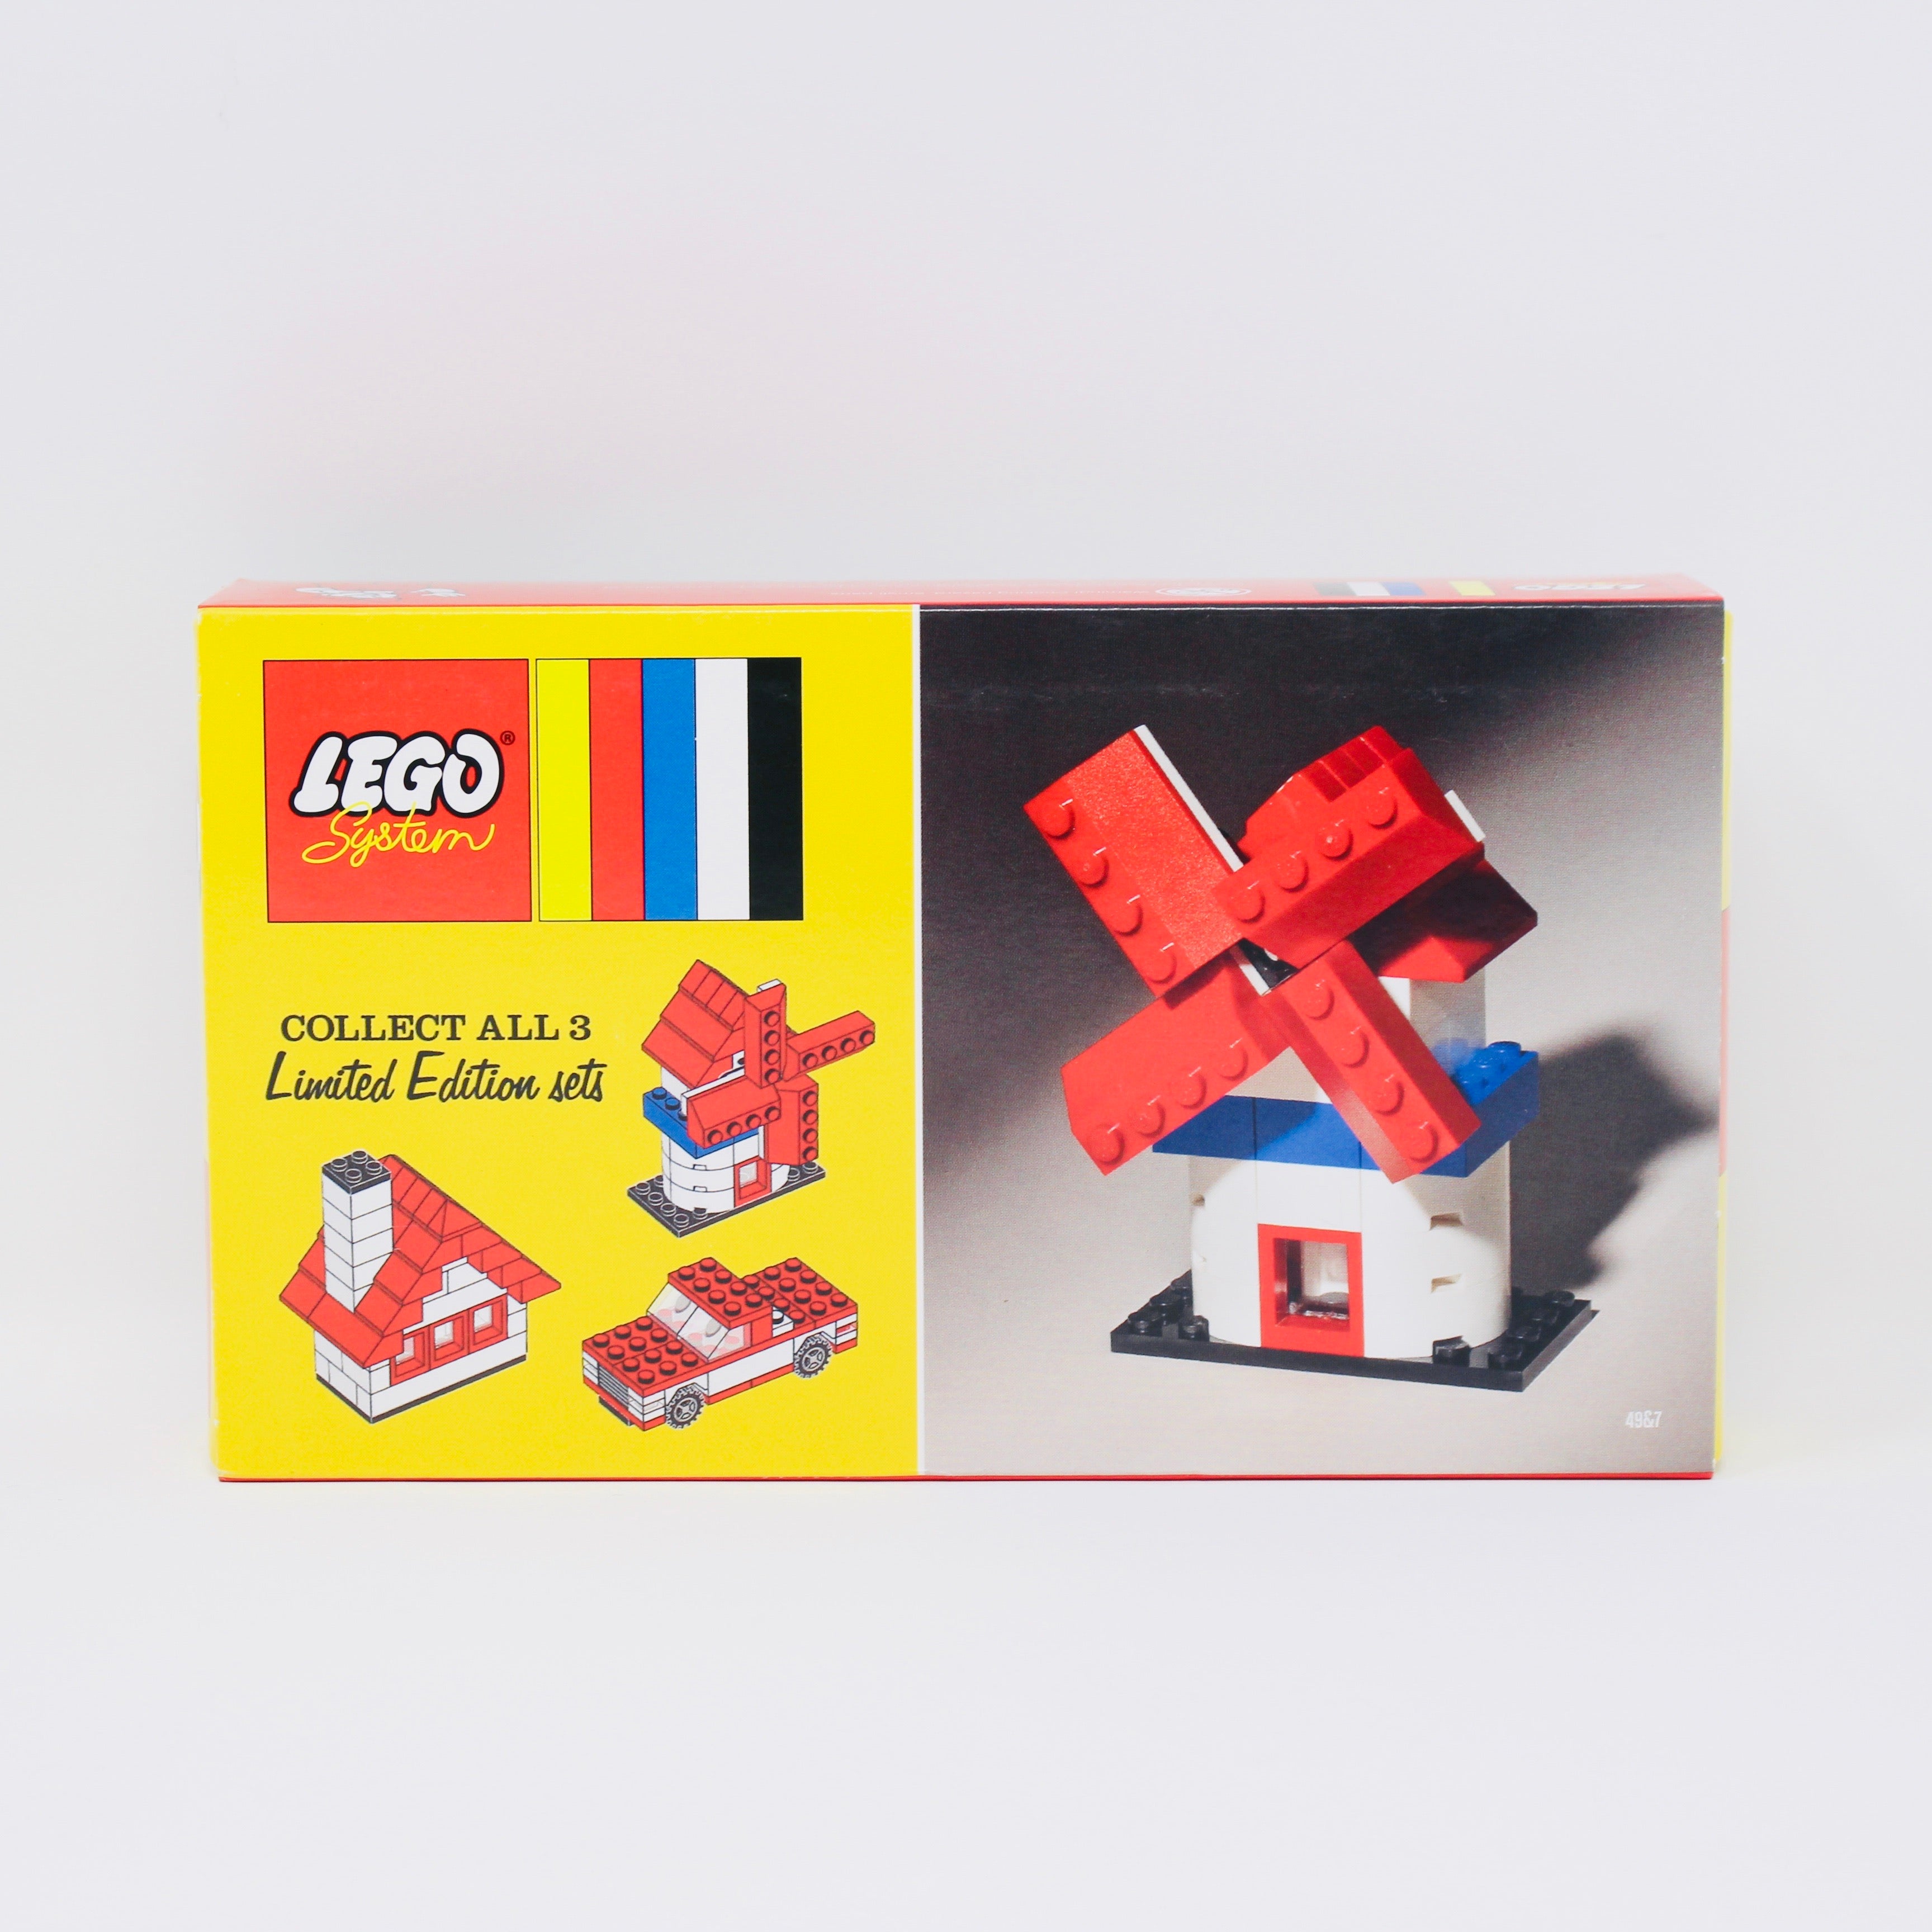 Retired Set 4000029 LEGO Windmill